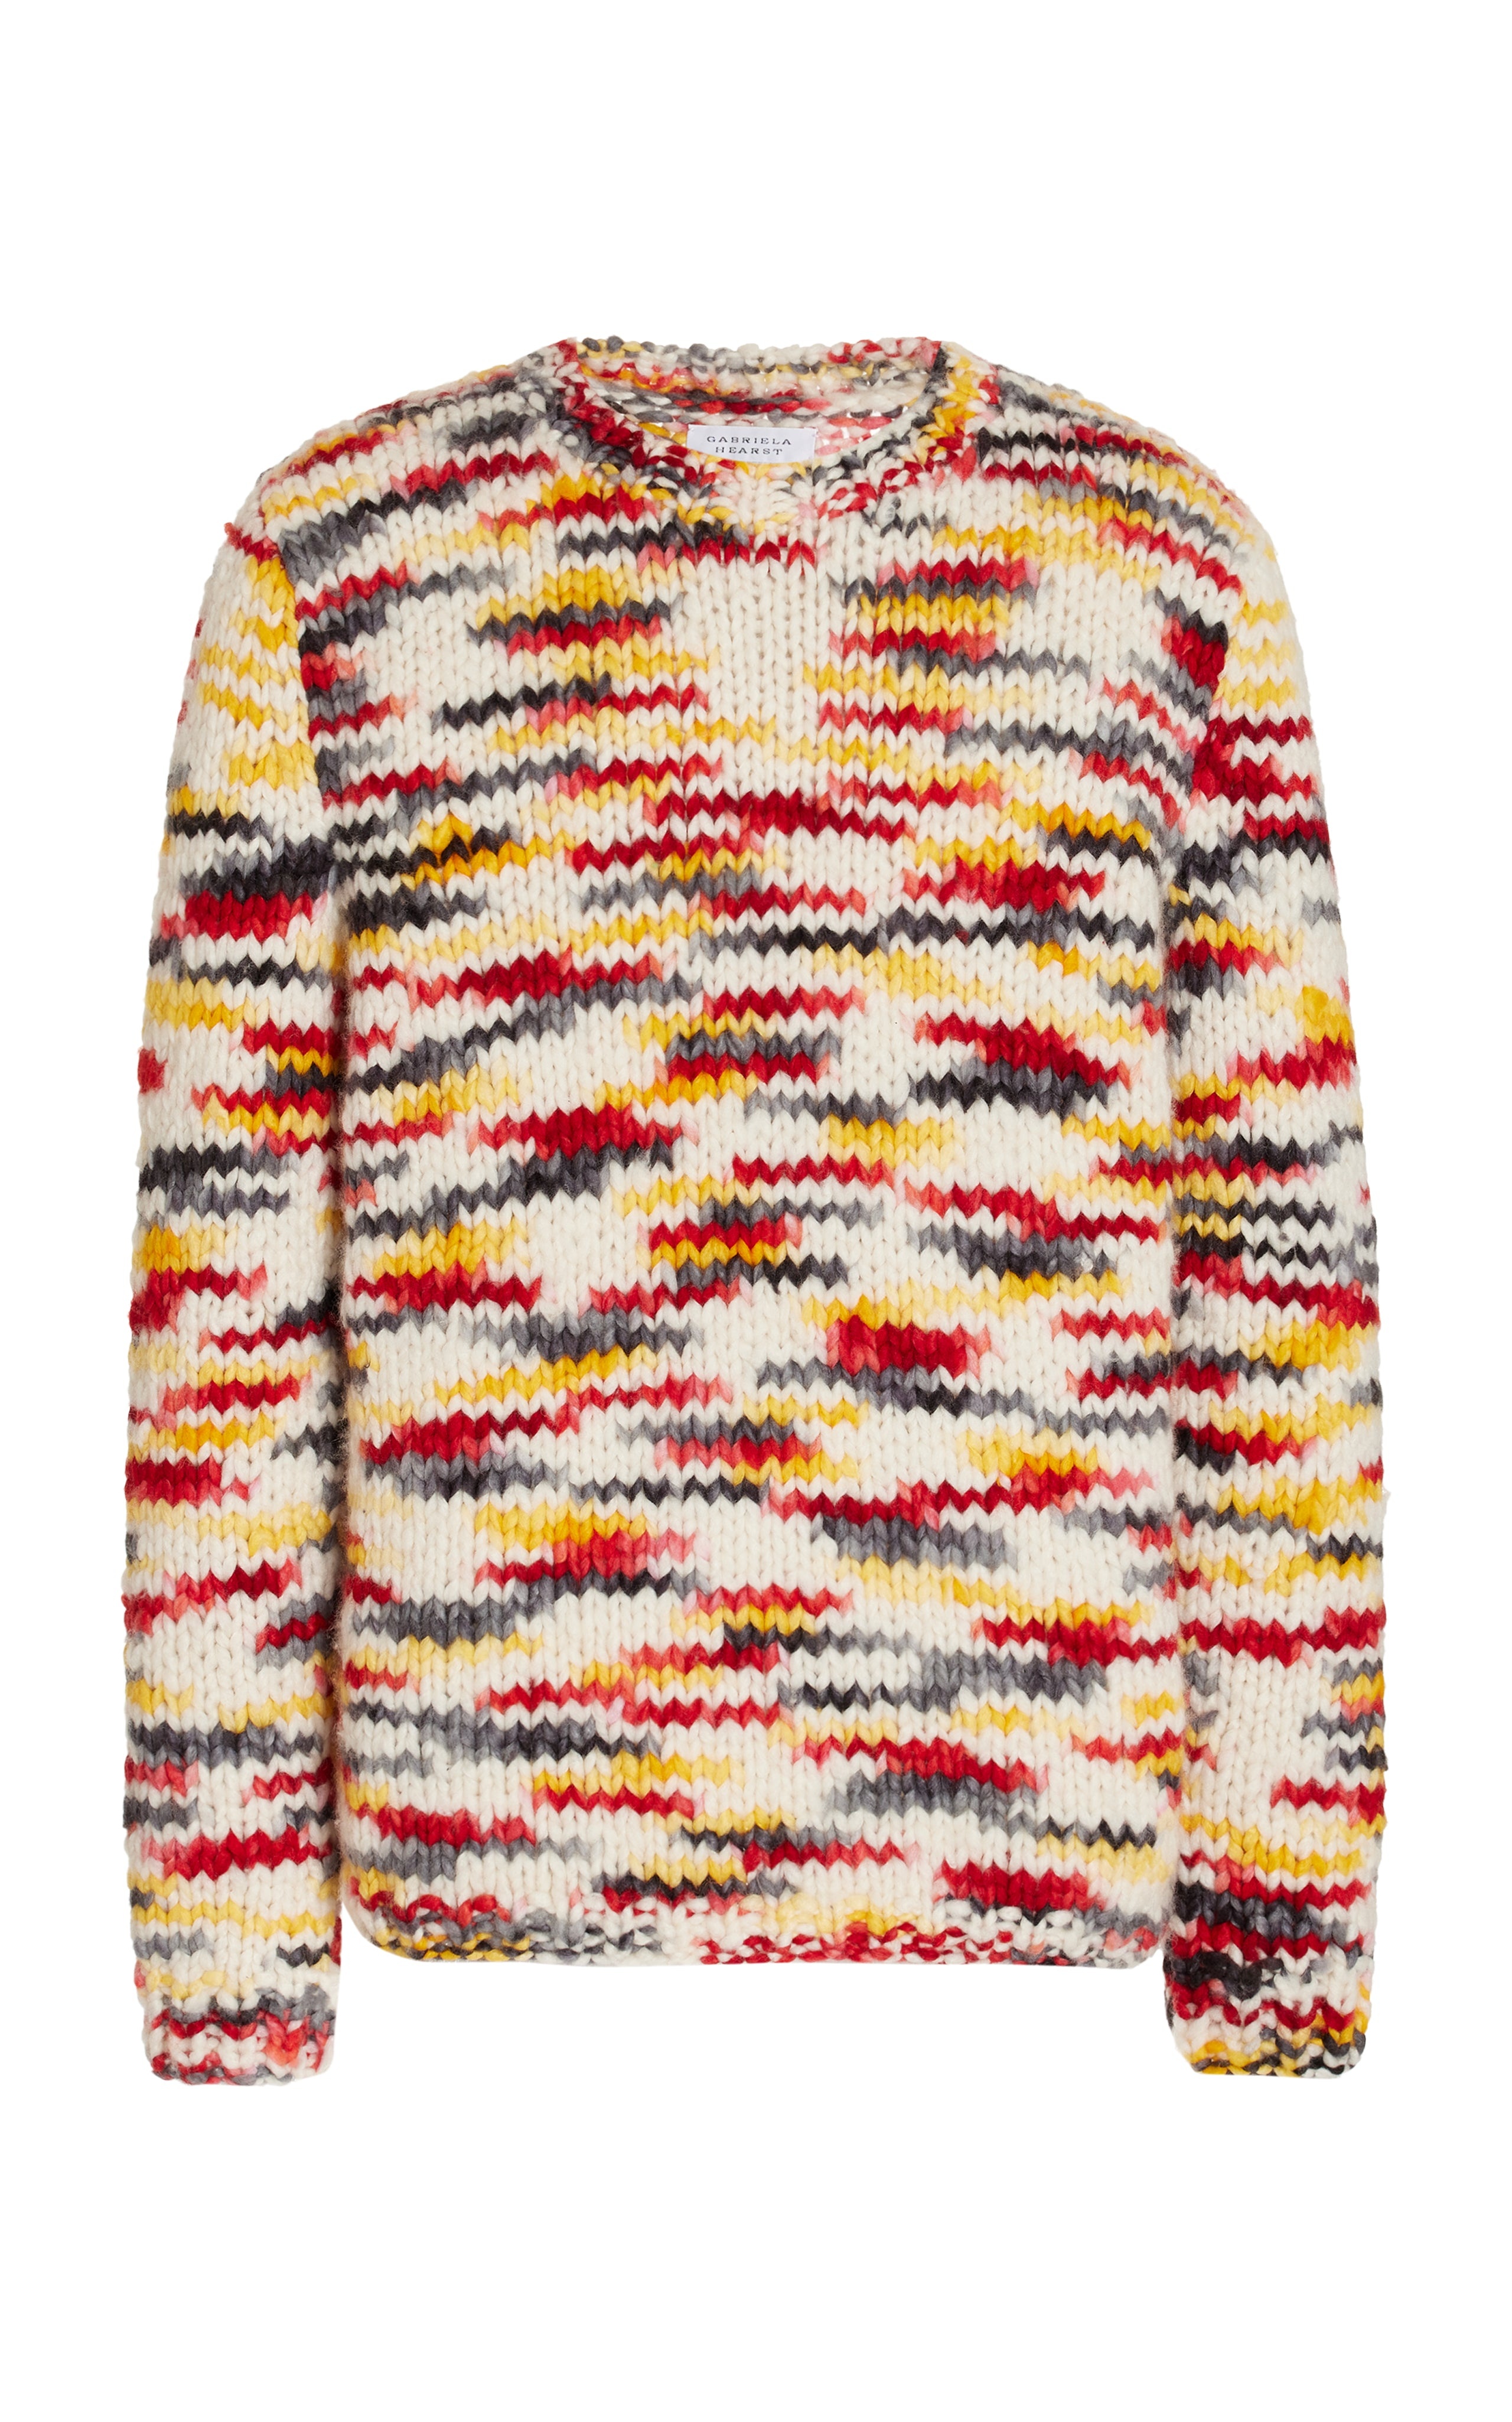 Lawrence Knit Sweater in Fire Multi Space Dye Welfat Cashmere - 1